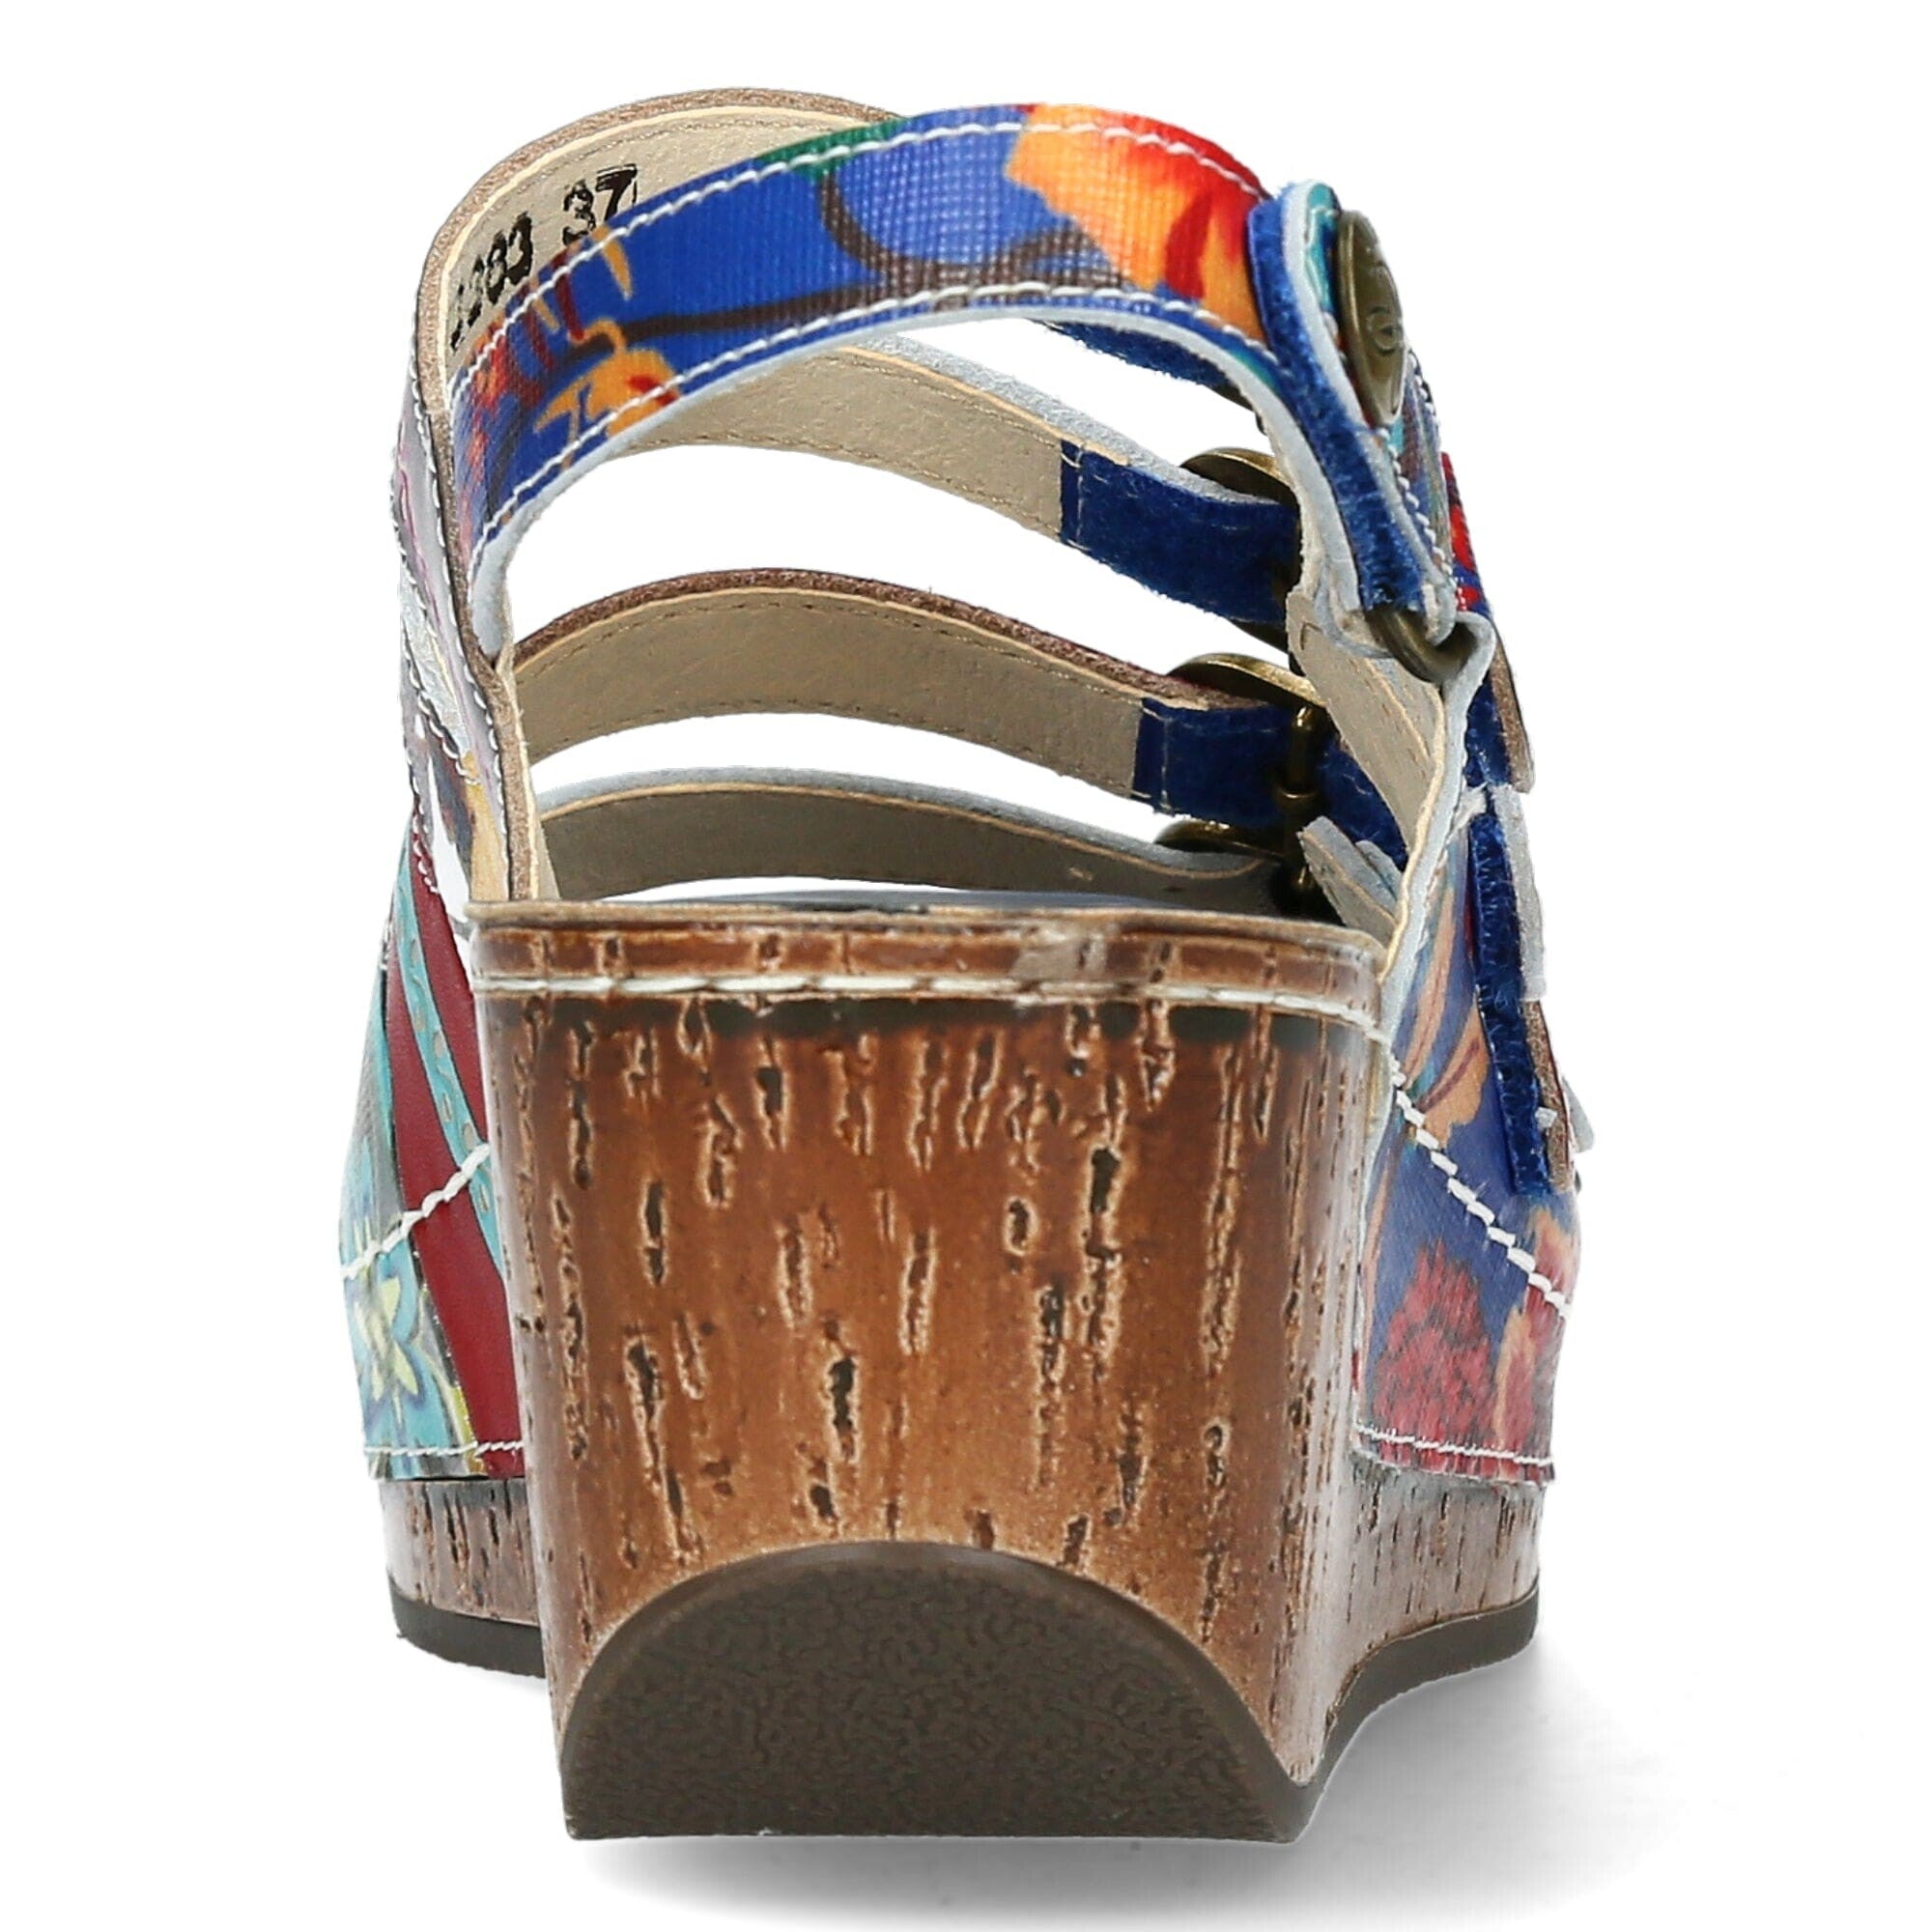 Chaussure DINO 0523 - Sandale